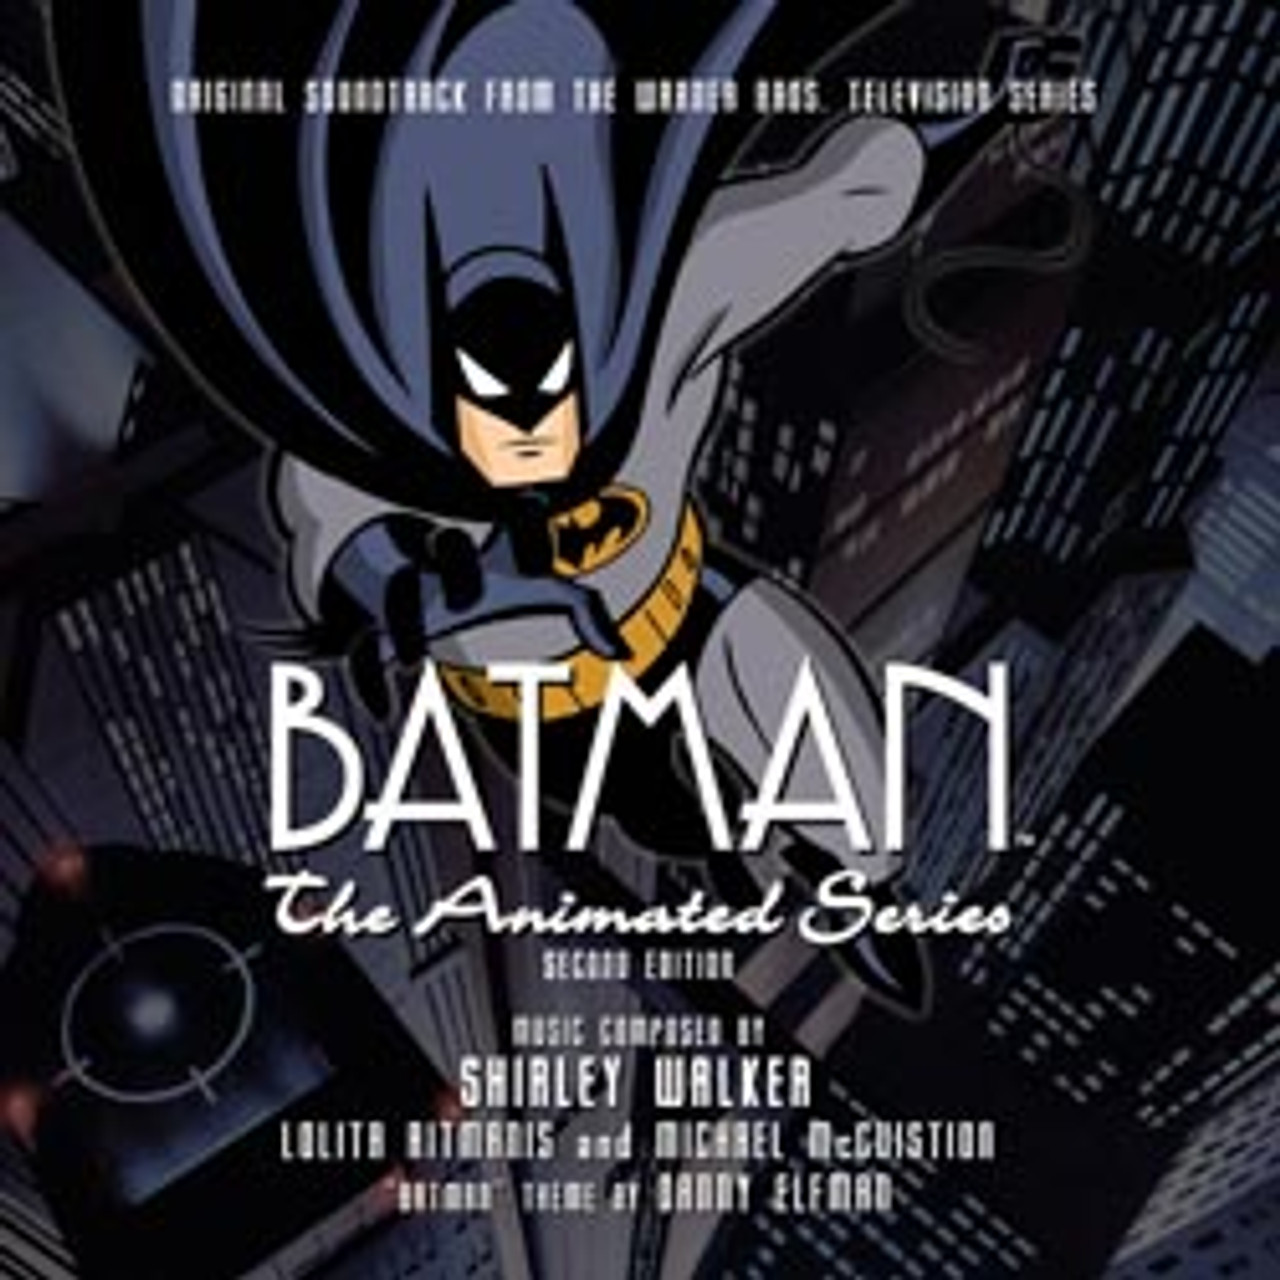 BATMAN THE ANIMATED SERIES: LIMITED EDITION (2 CD SET) La Land Records